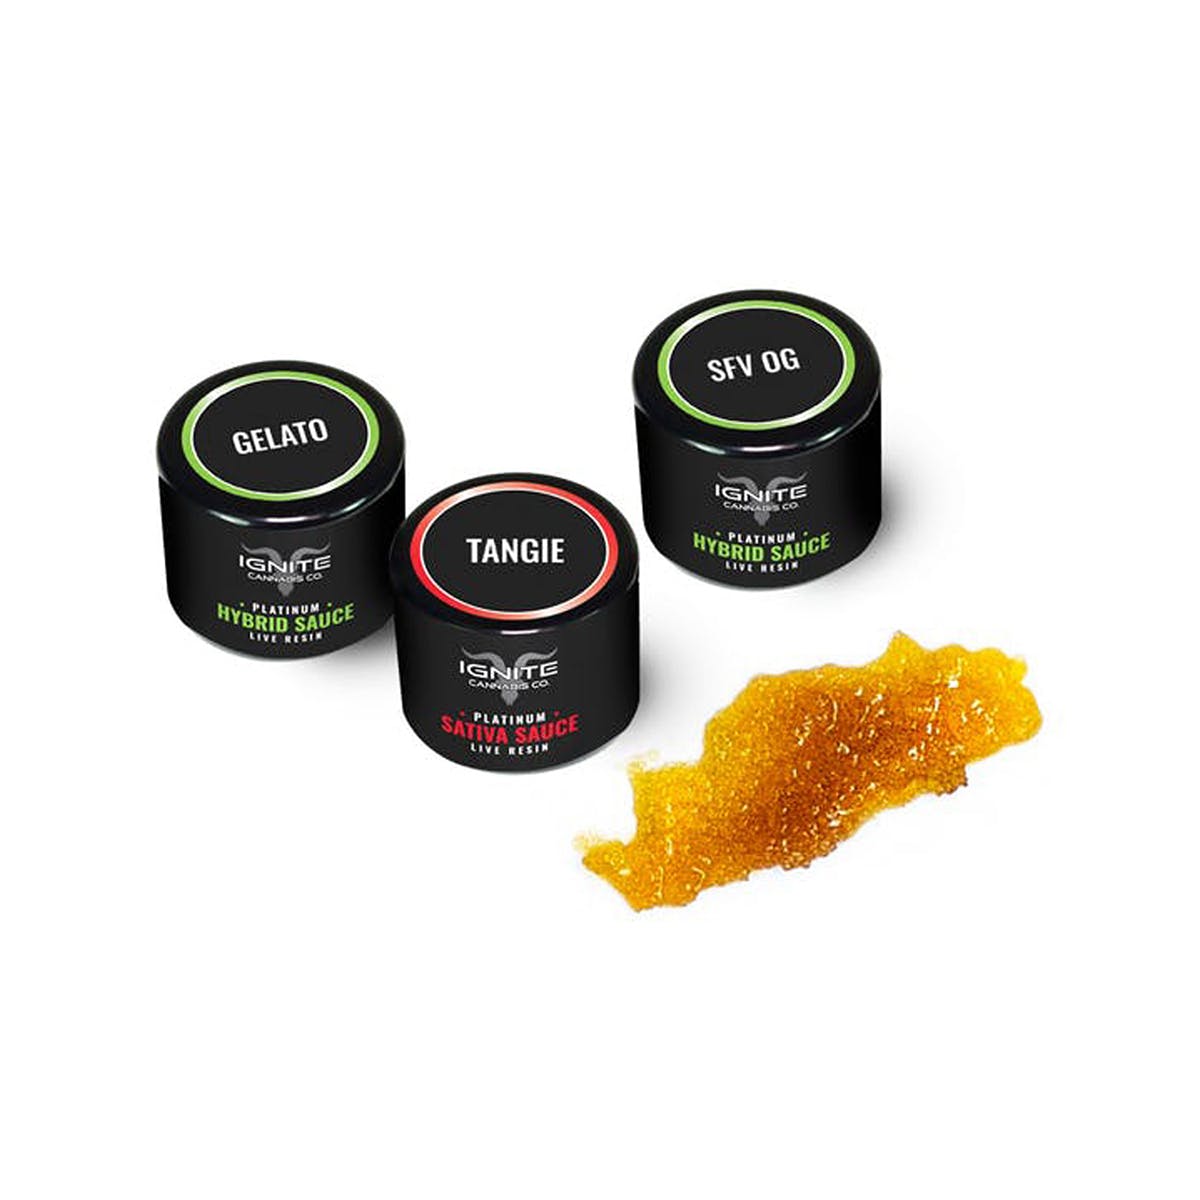 marijuana-dispensaries-life-enhancement-services-in-vallejo-sfv-og-live-resin-sauce